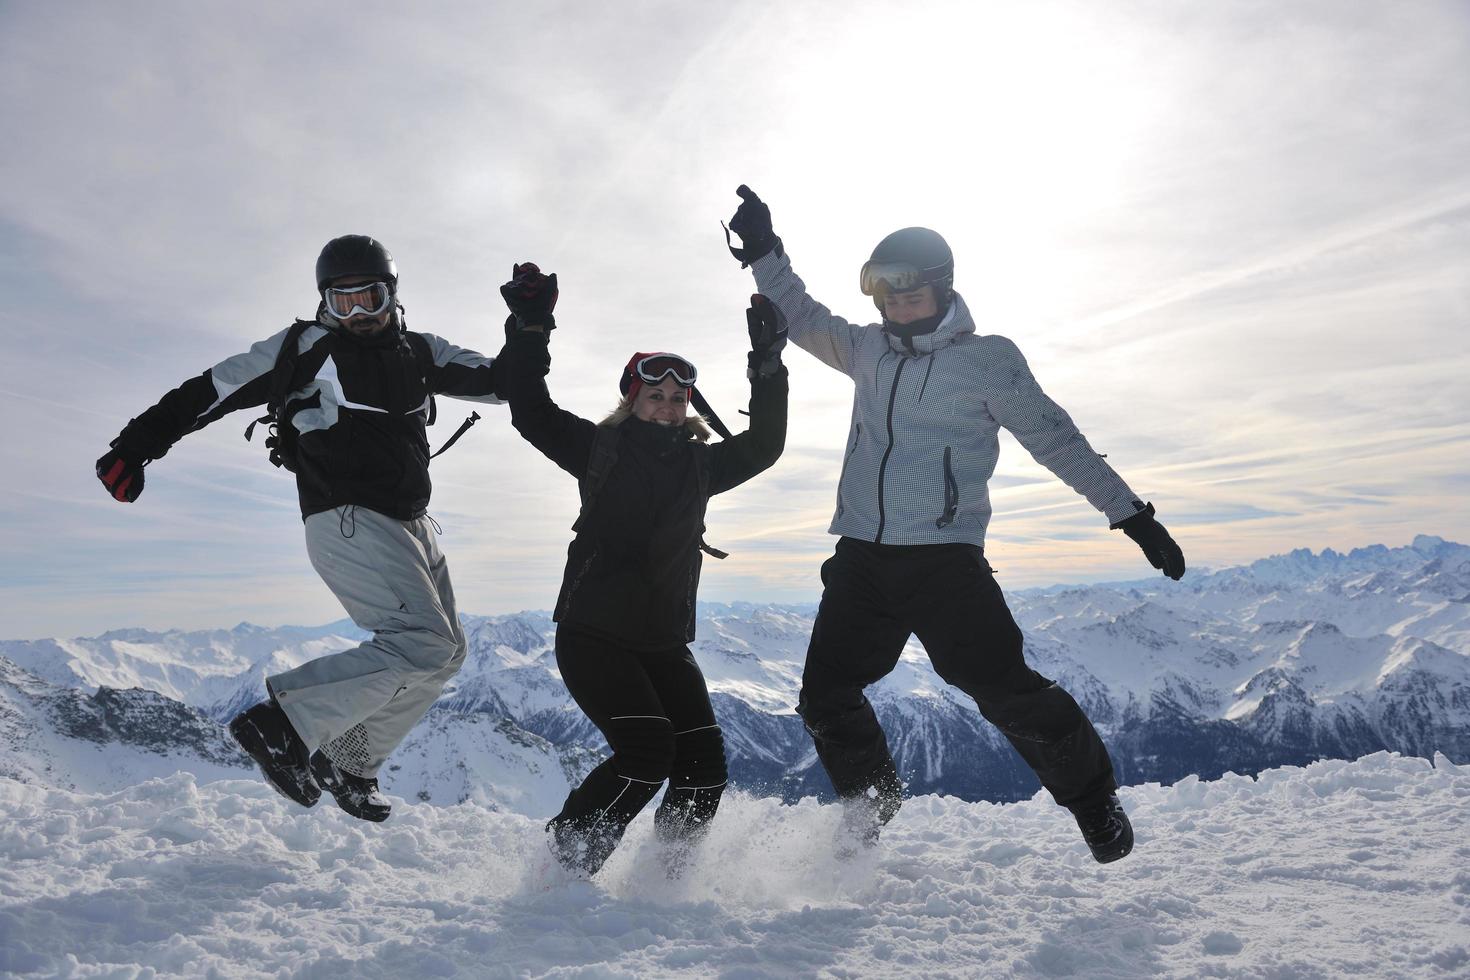 people group on snow at winter season photo